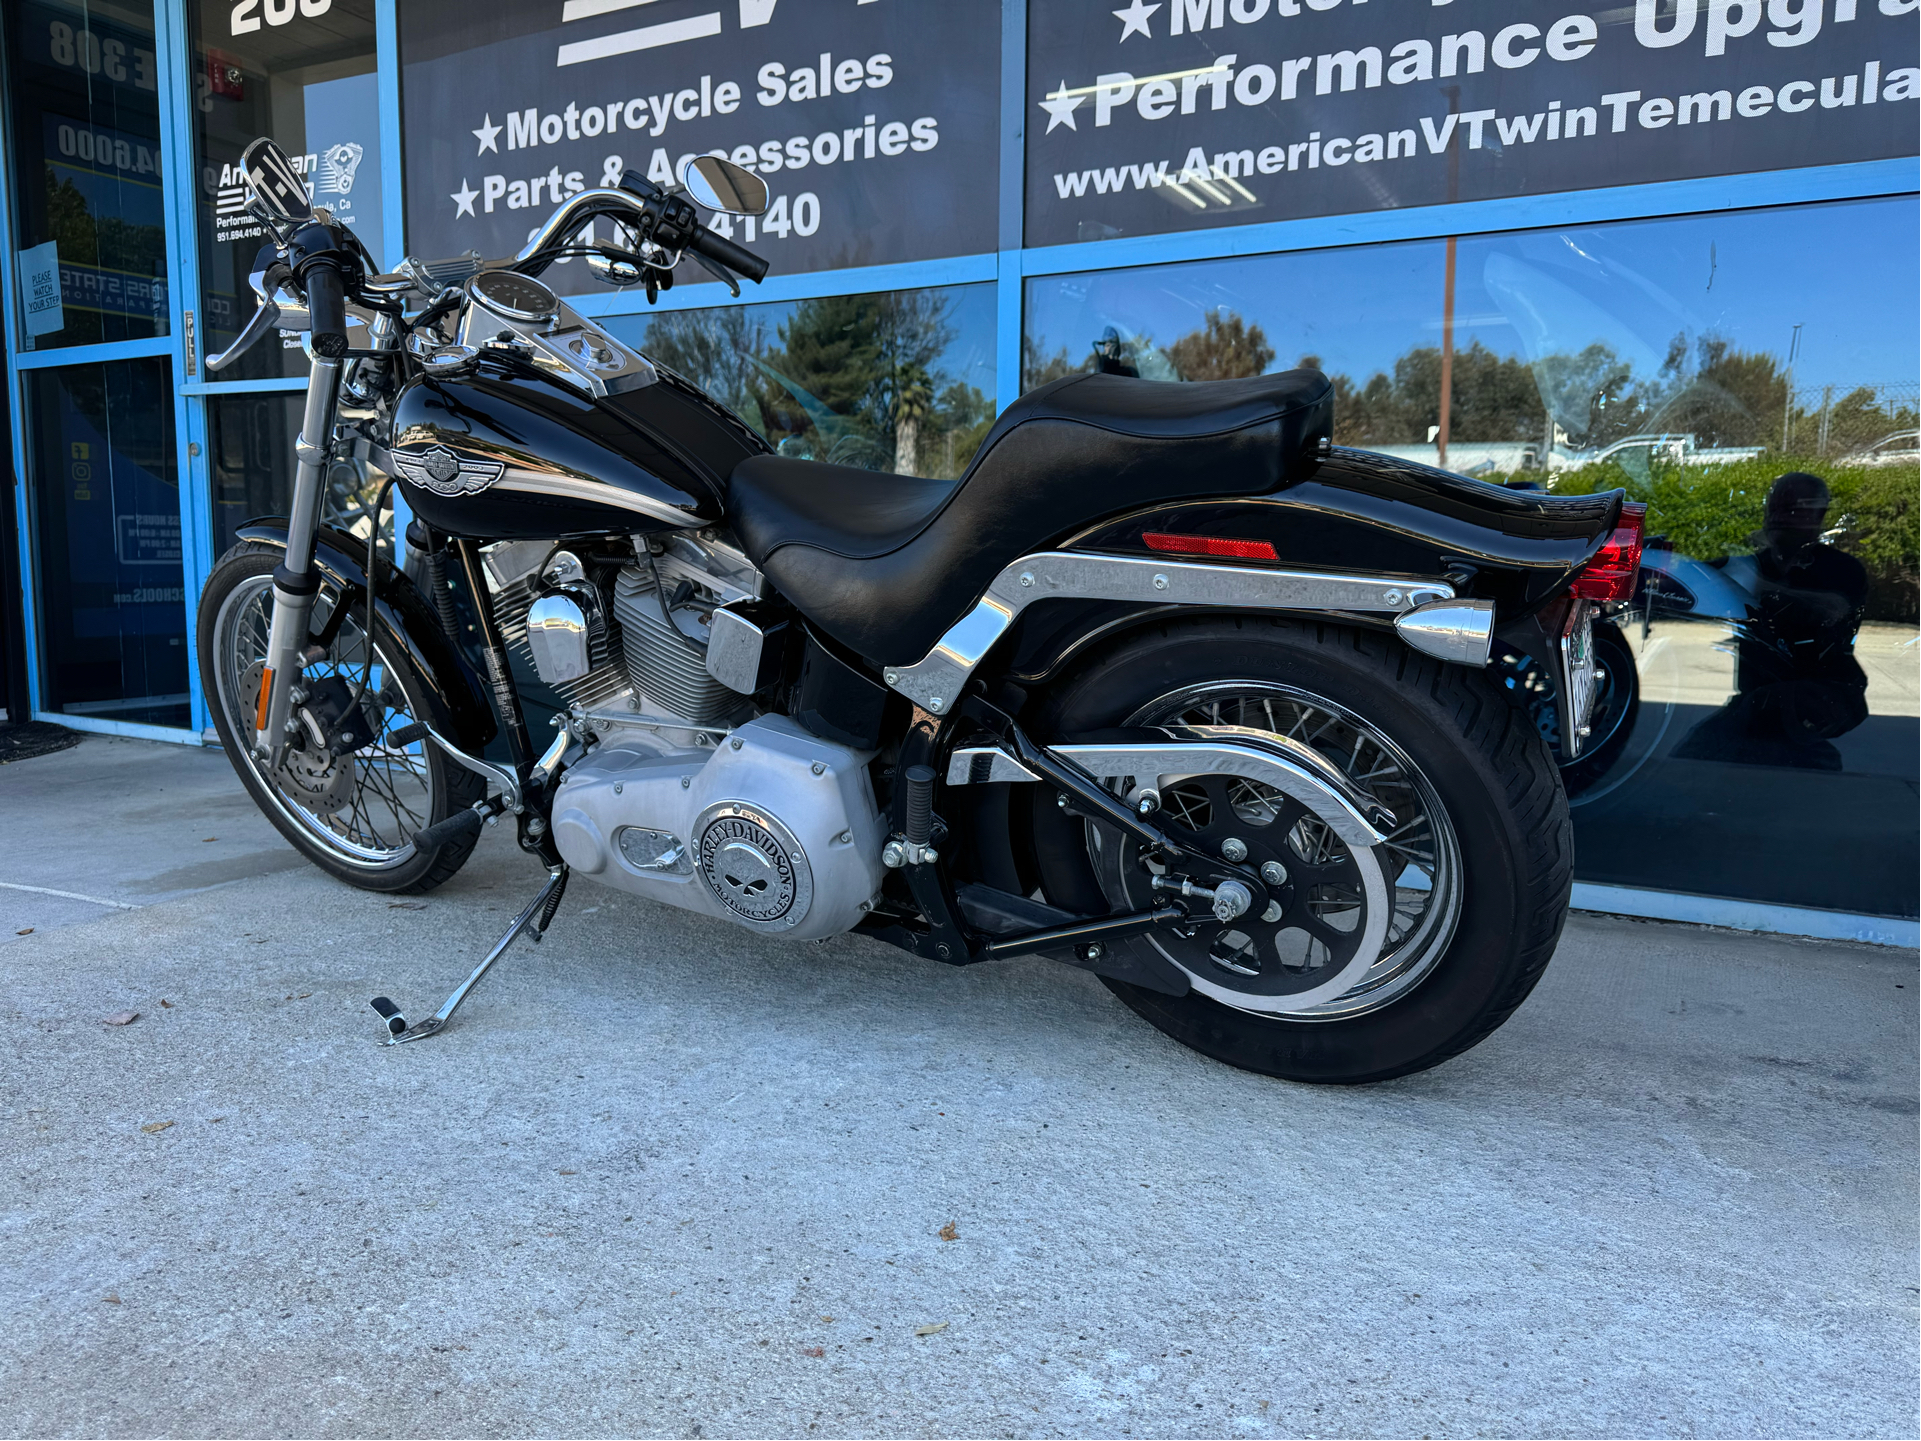 2003 Harley-Davidson FXST/FXSTI Softail®  Standard in Temecula, California - Photo 6